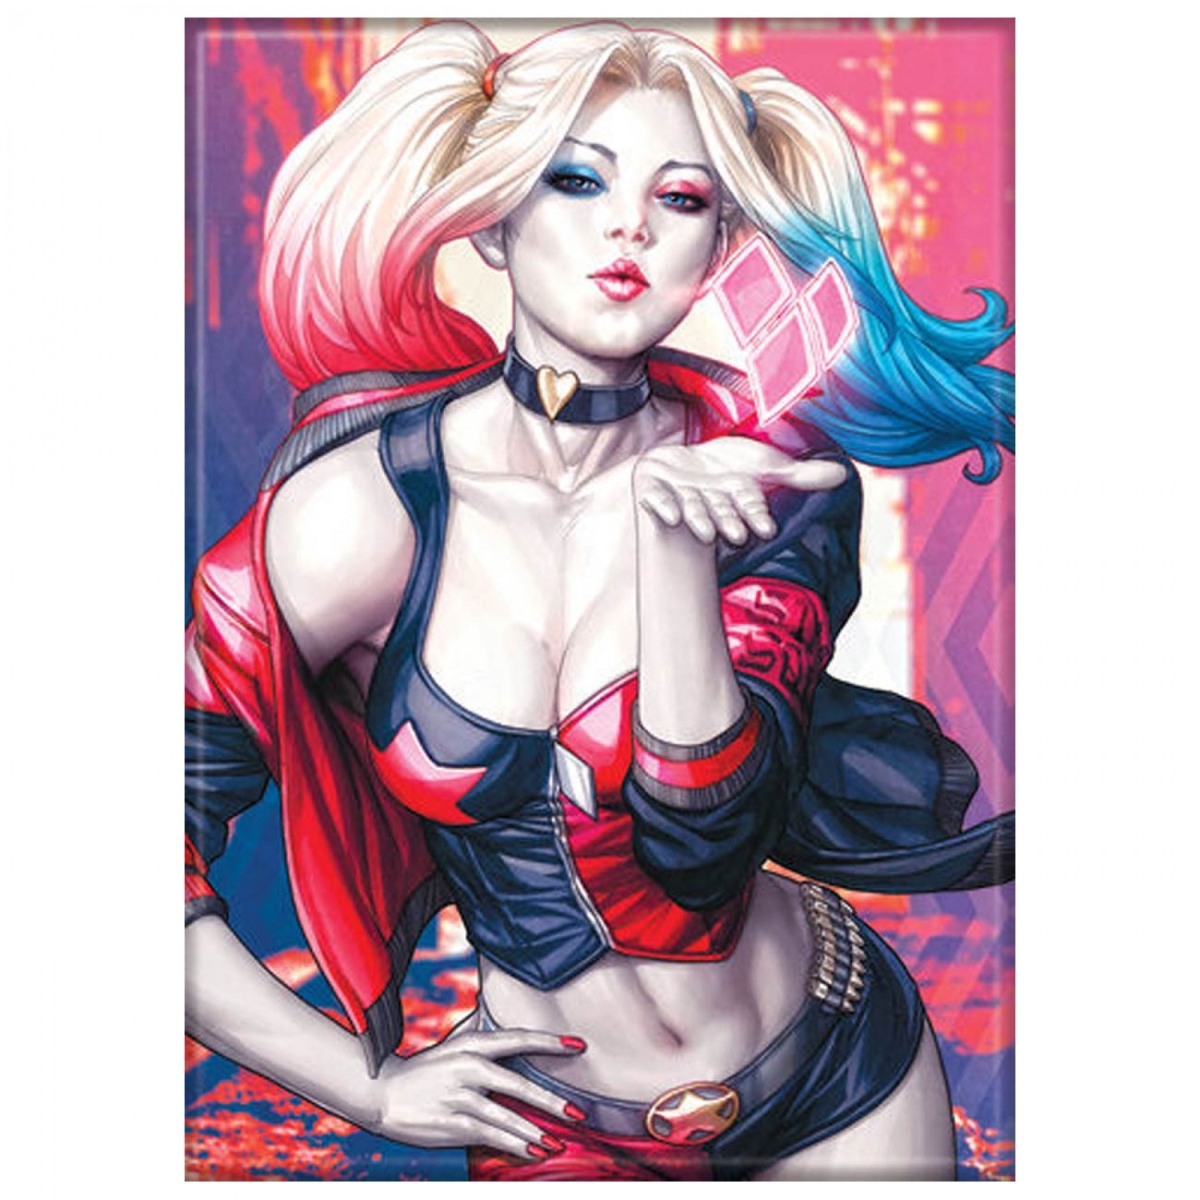 Picture of Harley Quinn 802246 Harley Quinn Volume 3 No.1 Artgerm Magnet